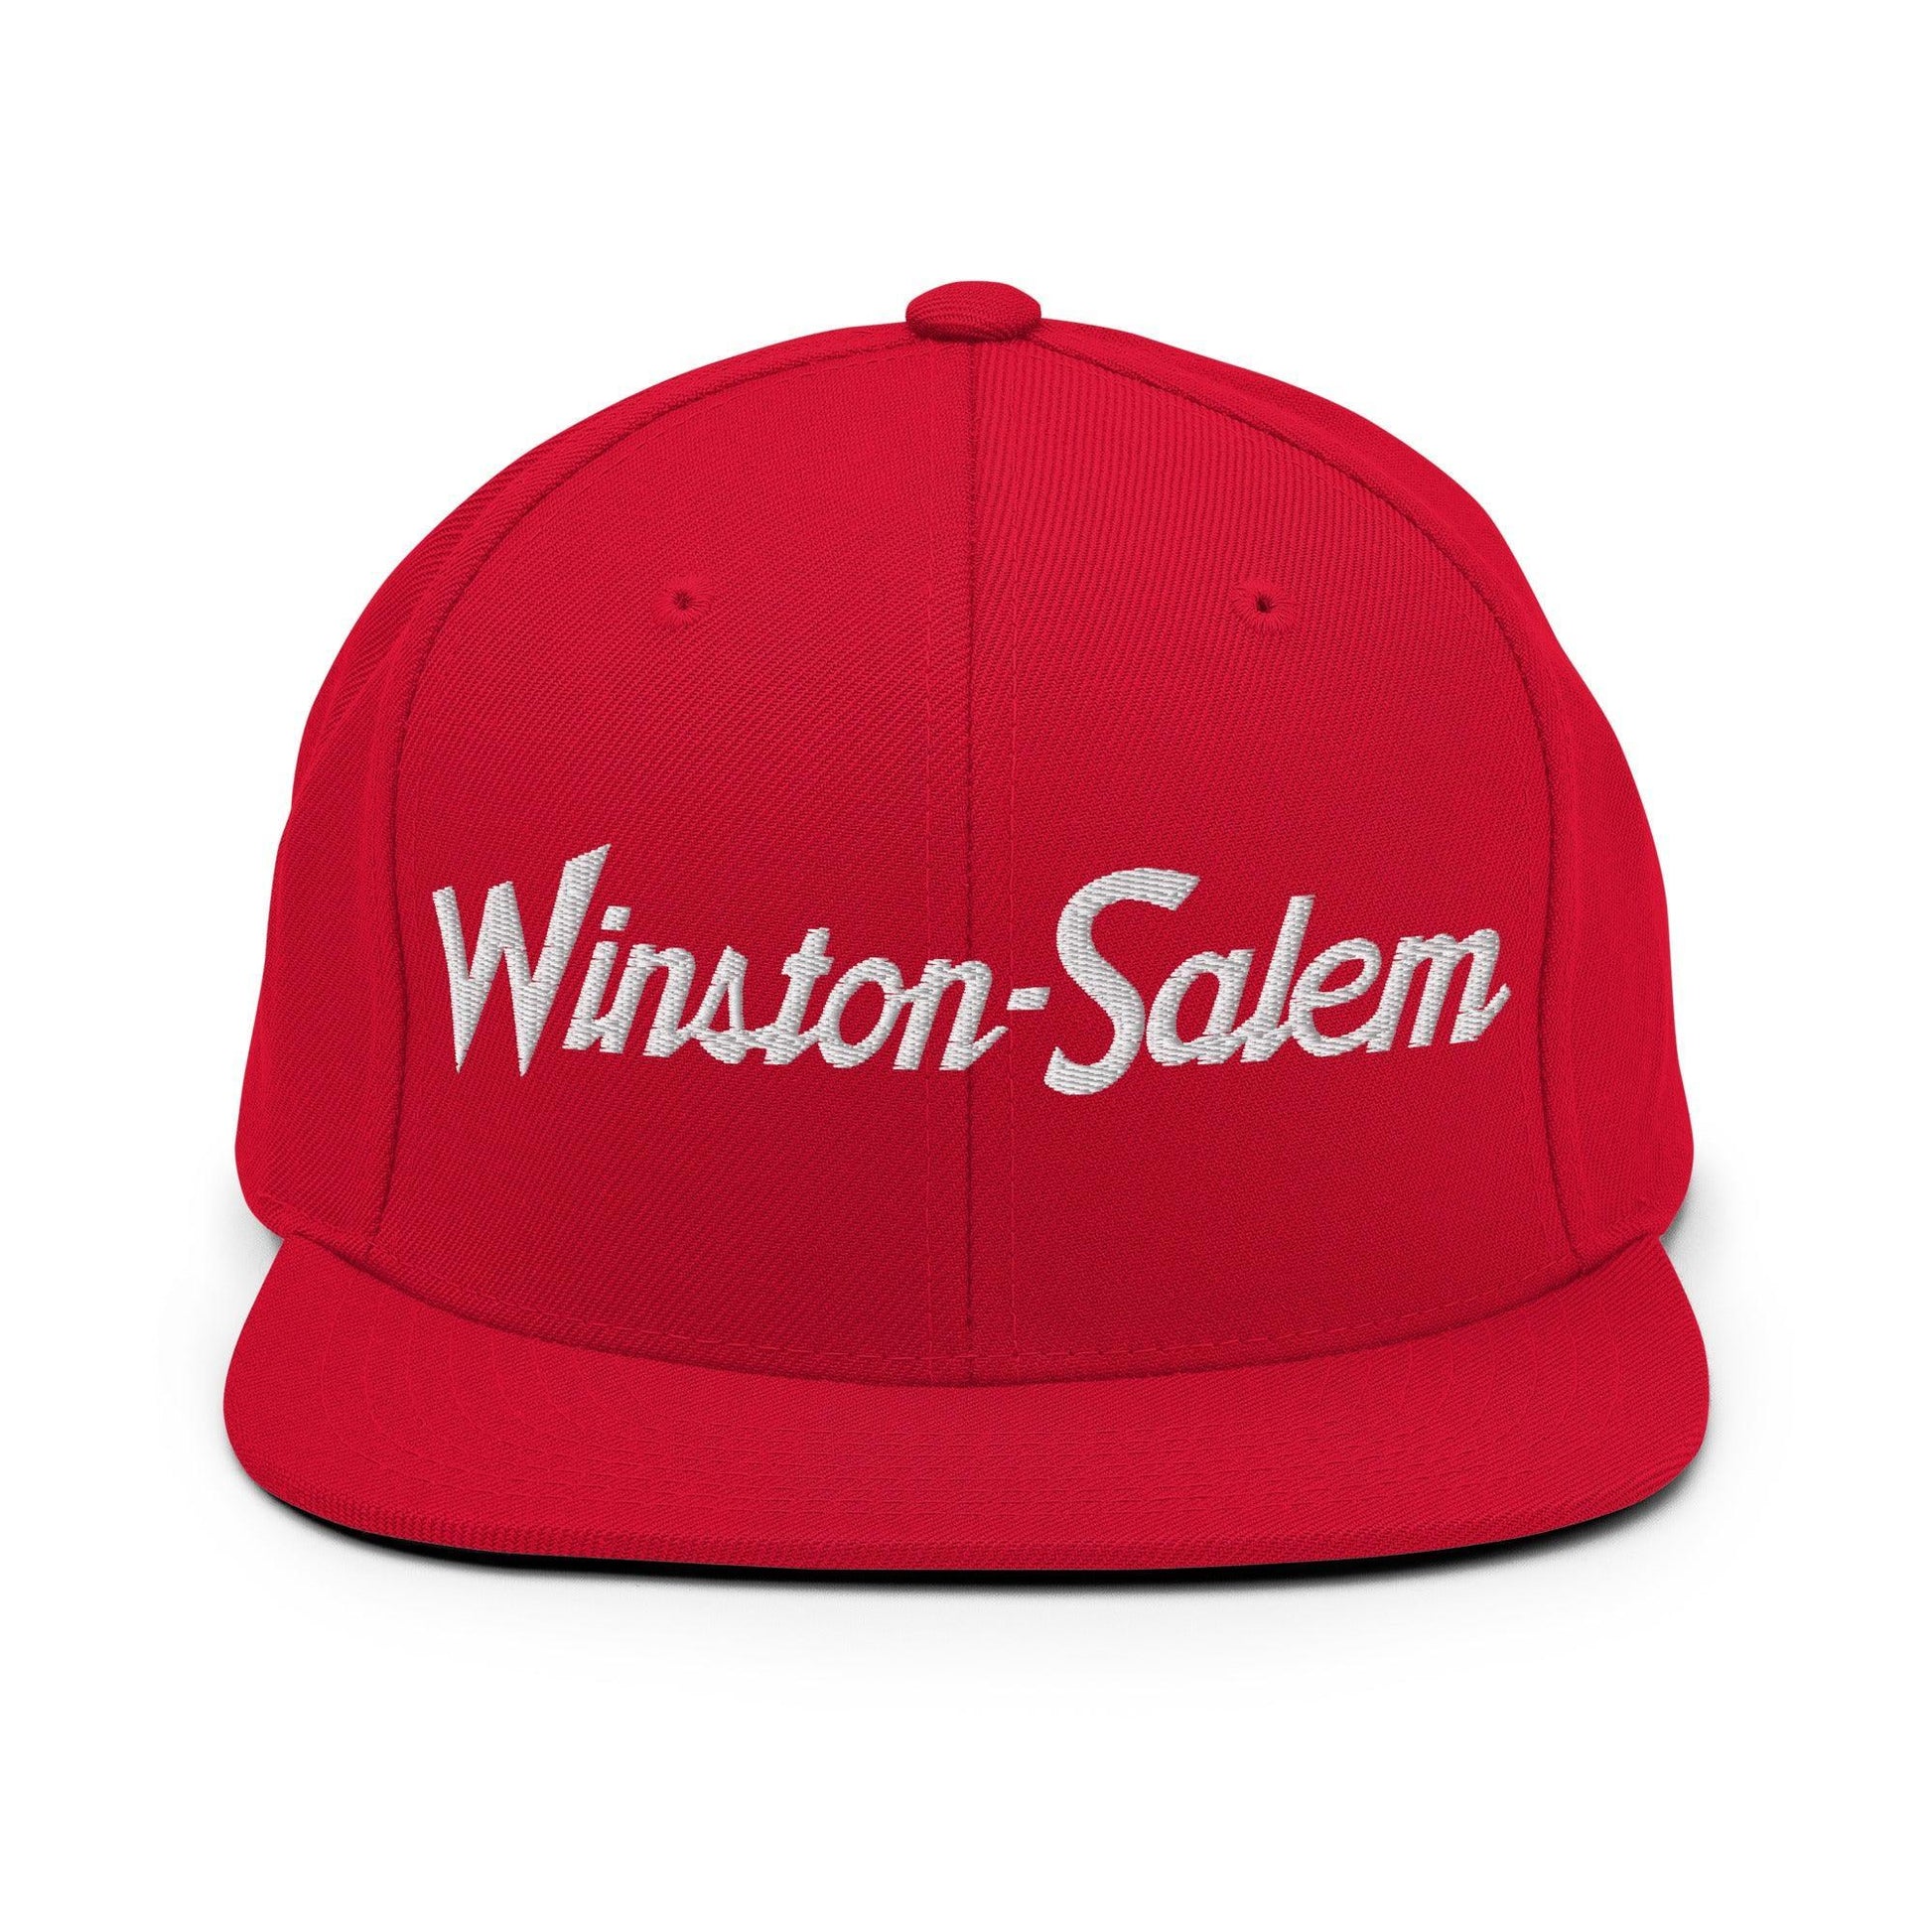 Winston-Salem Script Snapback Hat Red